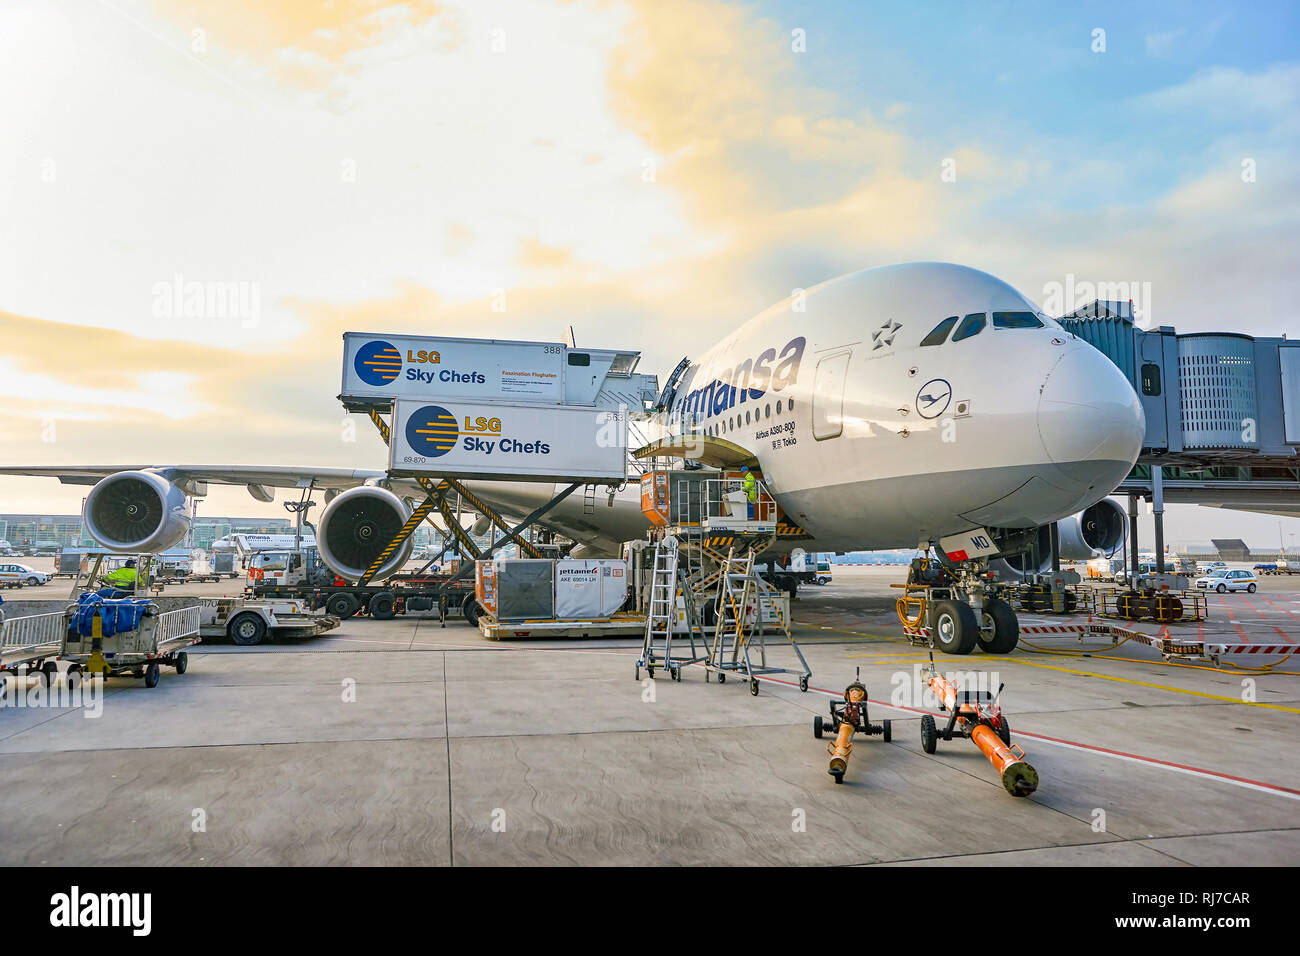 FRANKFURT, GERMANY - CIRCA MARCH 2016: Lufthansa Airbus A380 docked in Frankfurt Airport. Frankfurt Airport is a major international airport located i Stock Photo